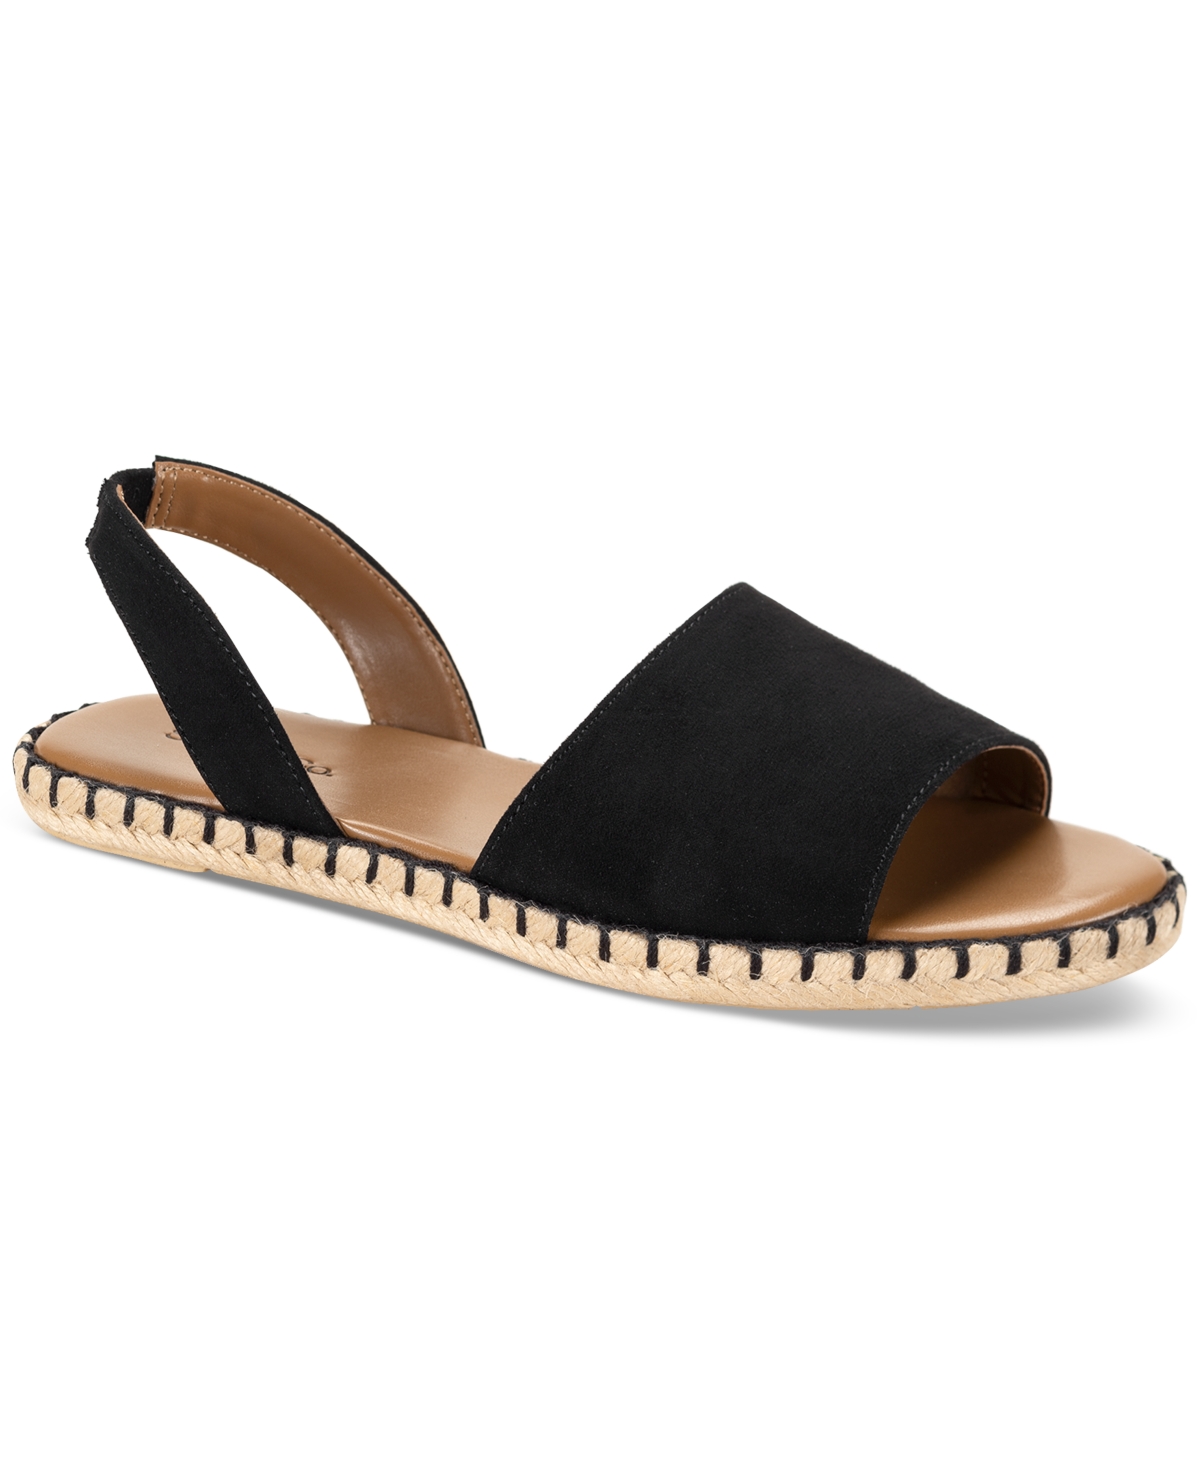 Reesee Slip-On Slingback Espadrille Flat Sandals, Created for Macy's - Black